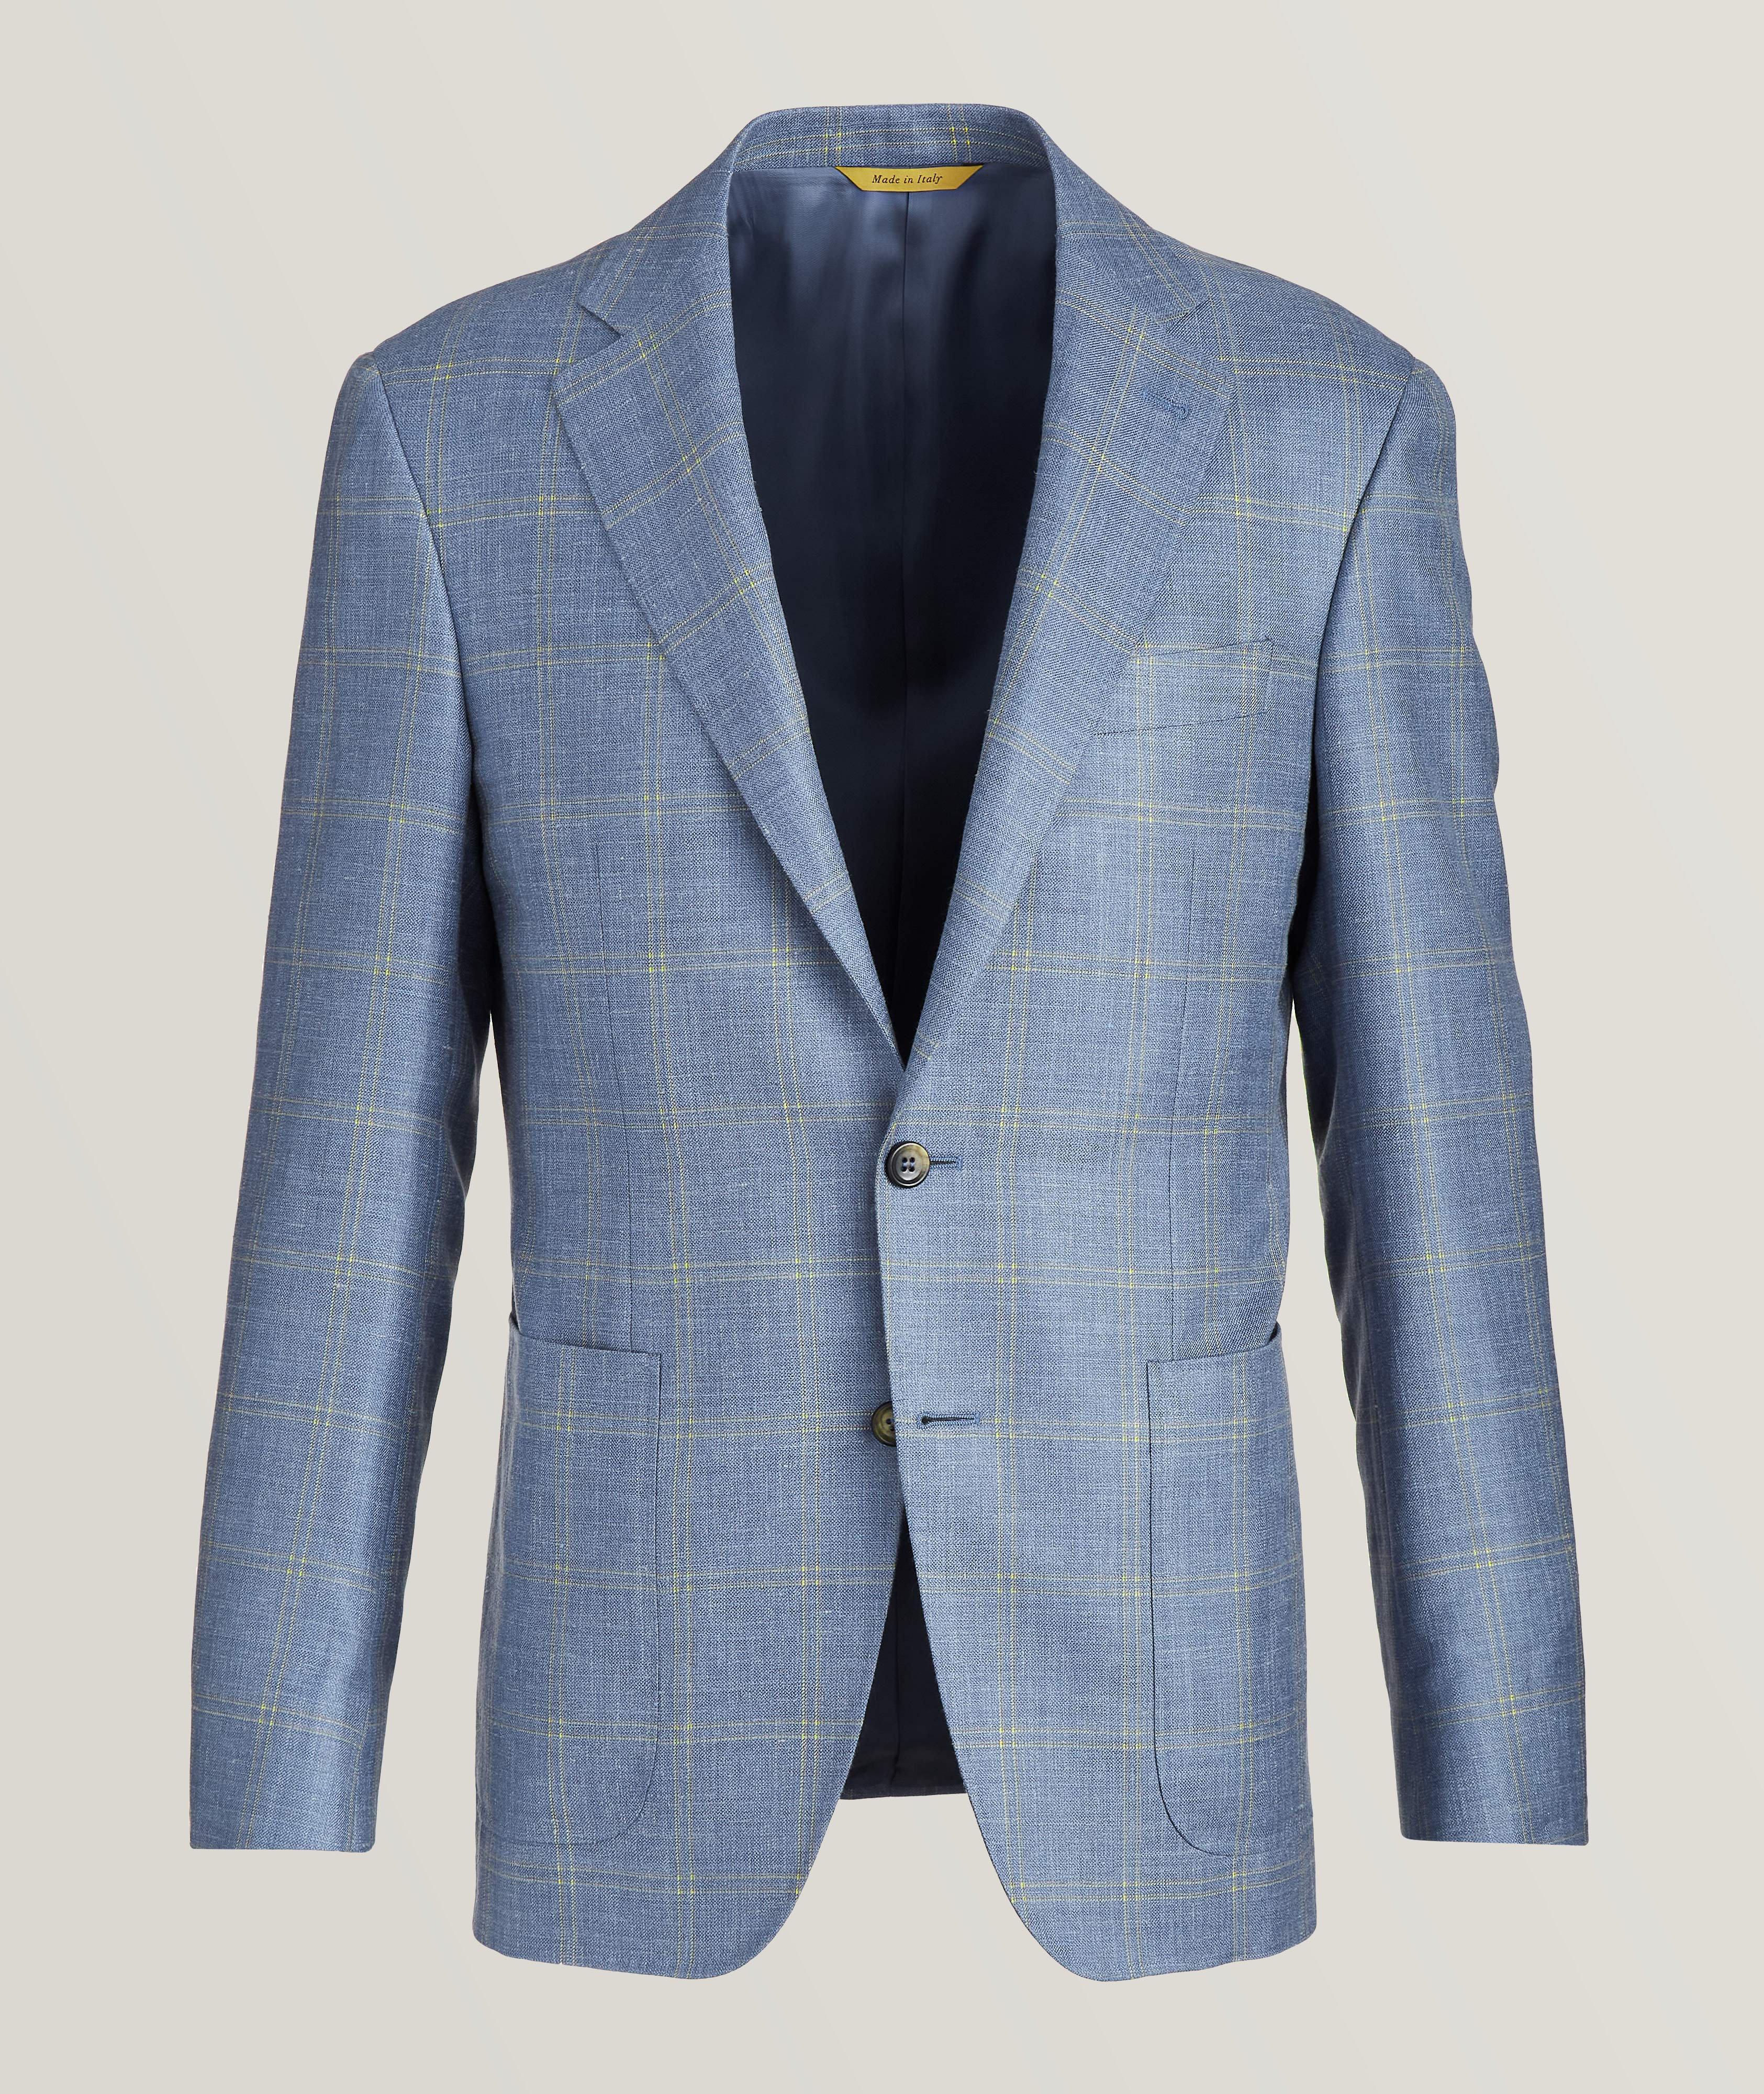 Kei Plaid Wool, Silk & Linen Sport Jacket image 0